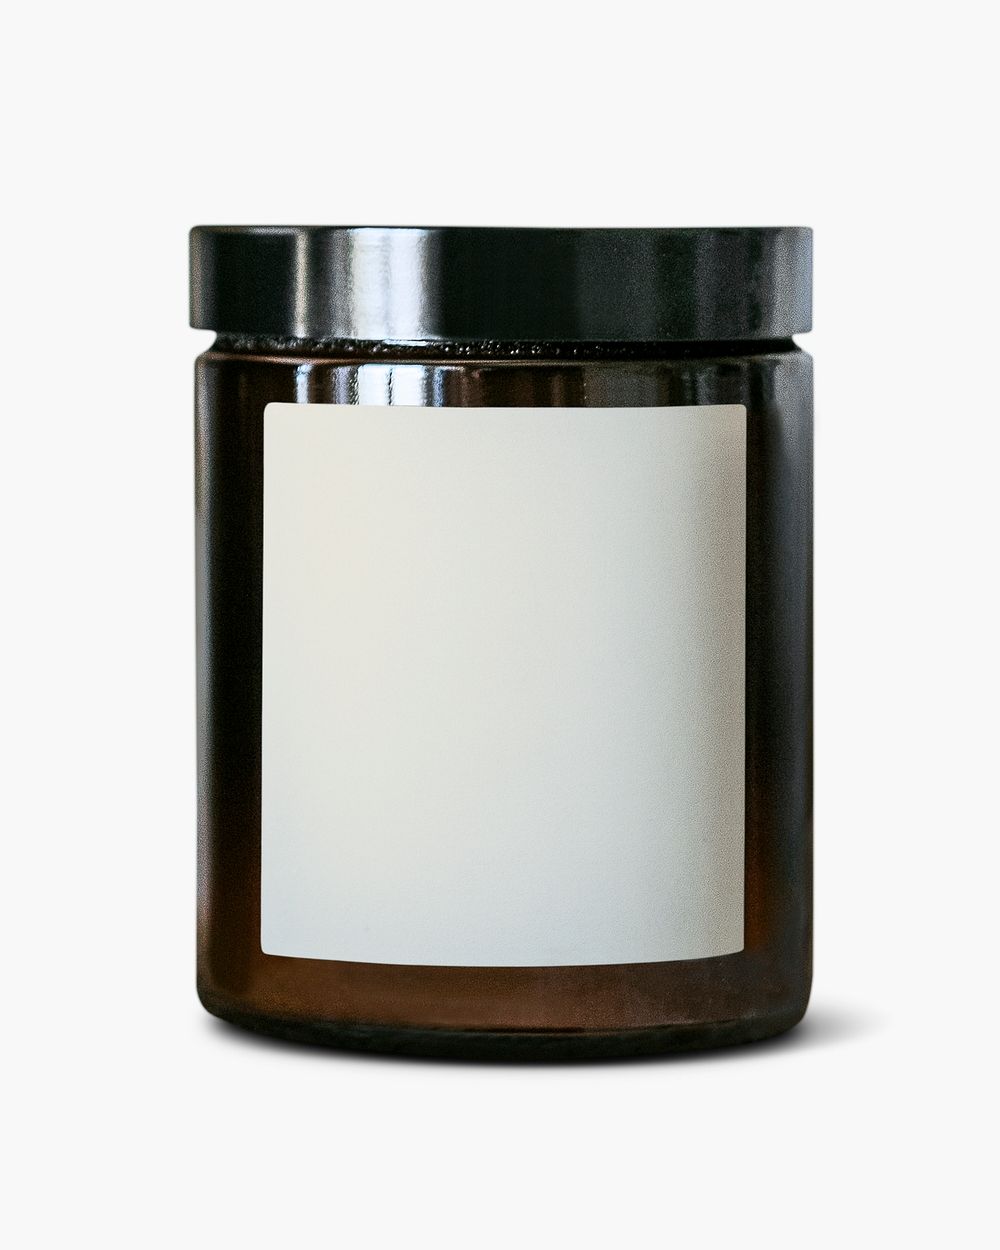 Beauty product jar minimal style